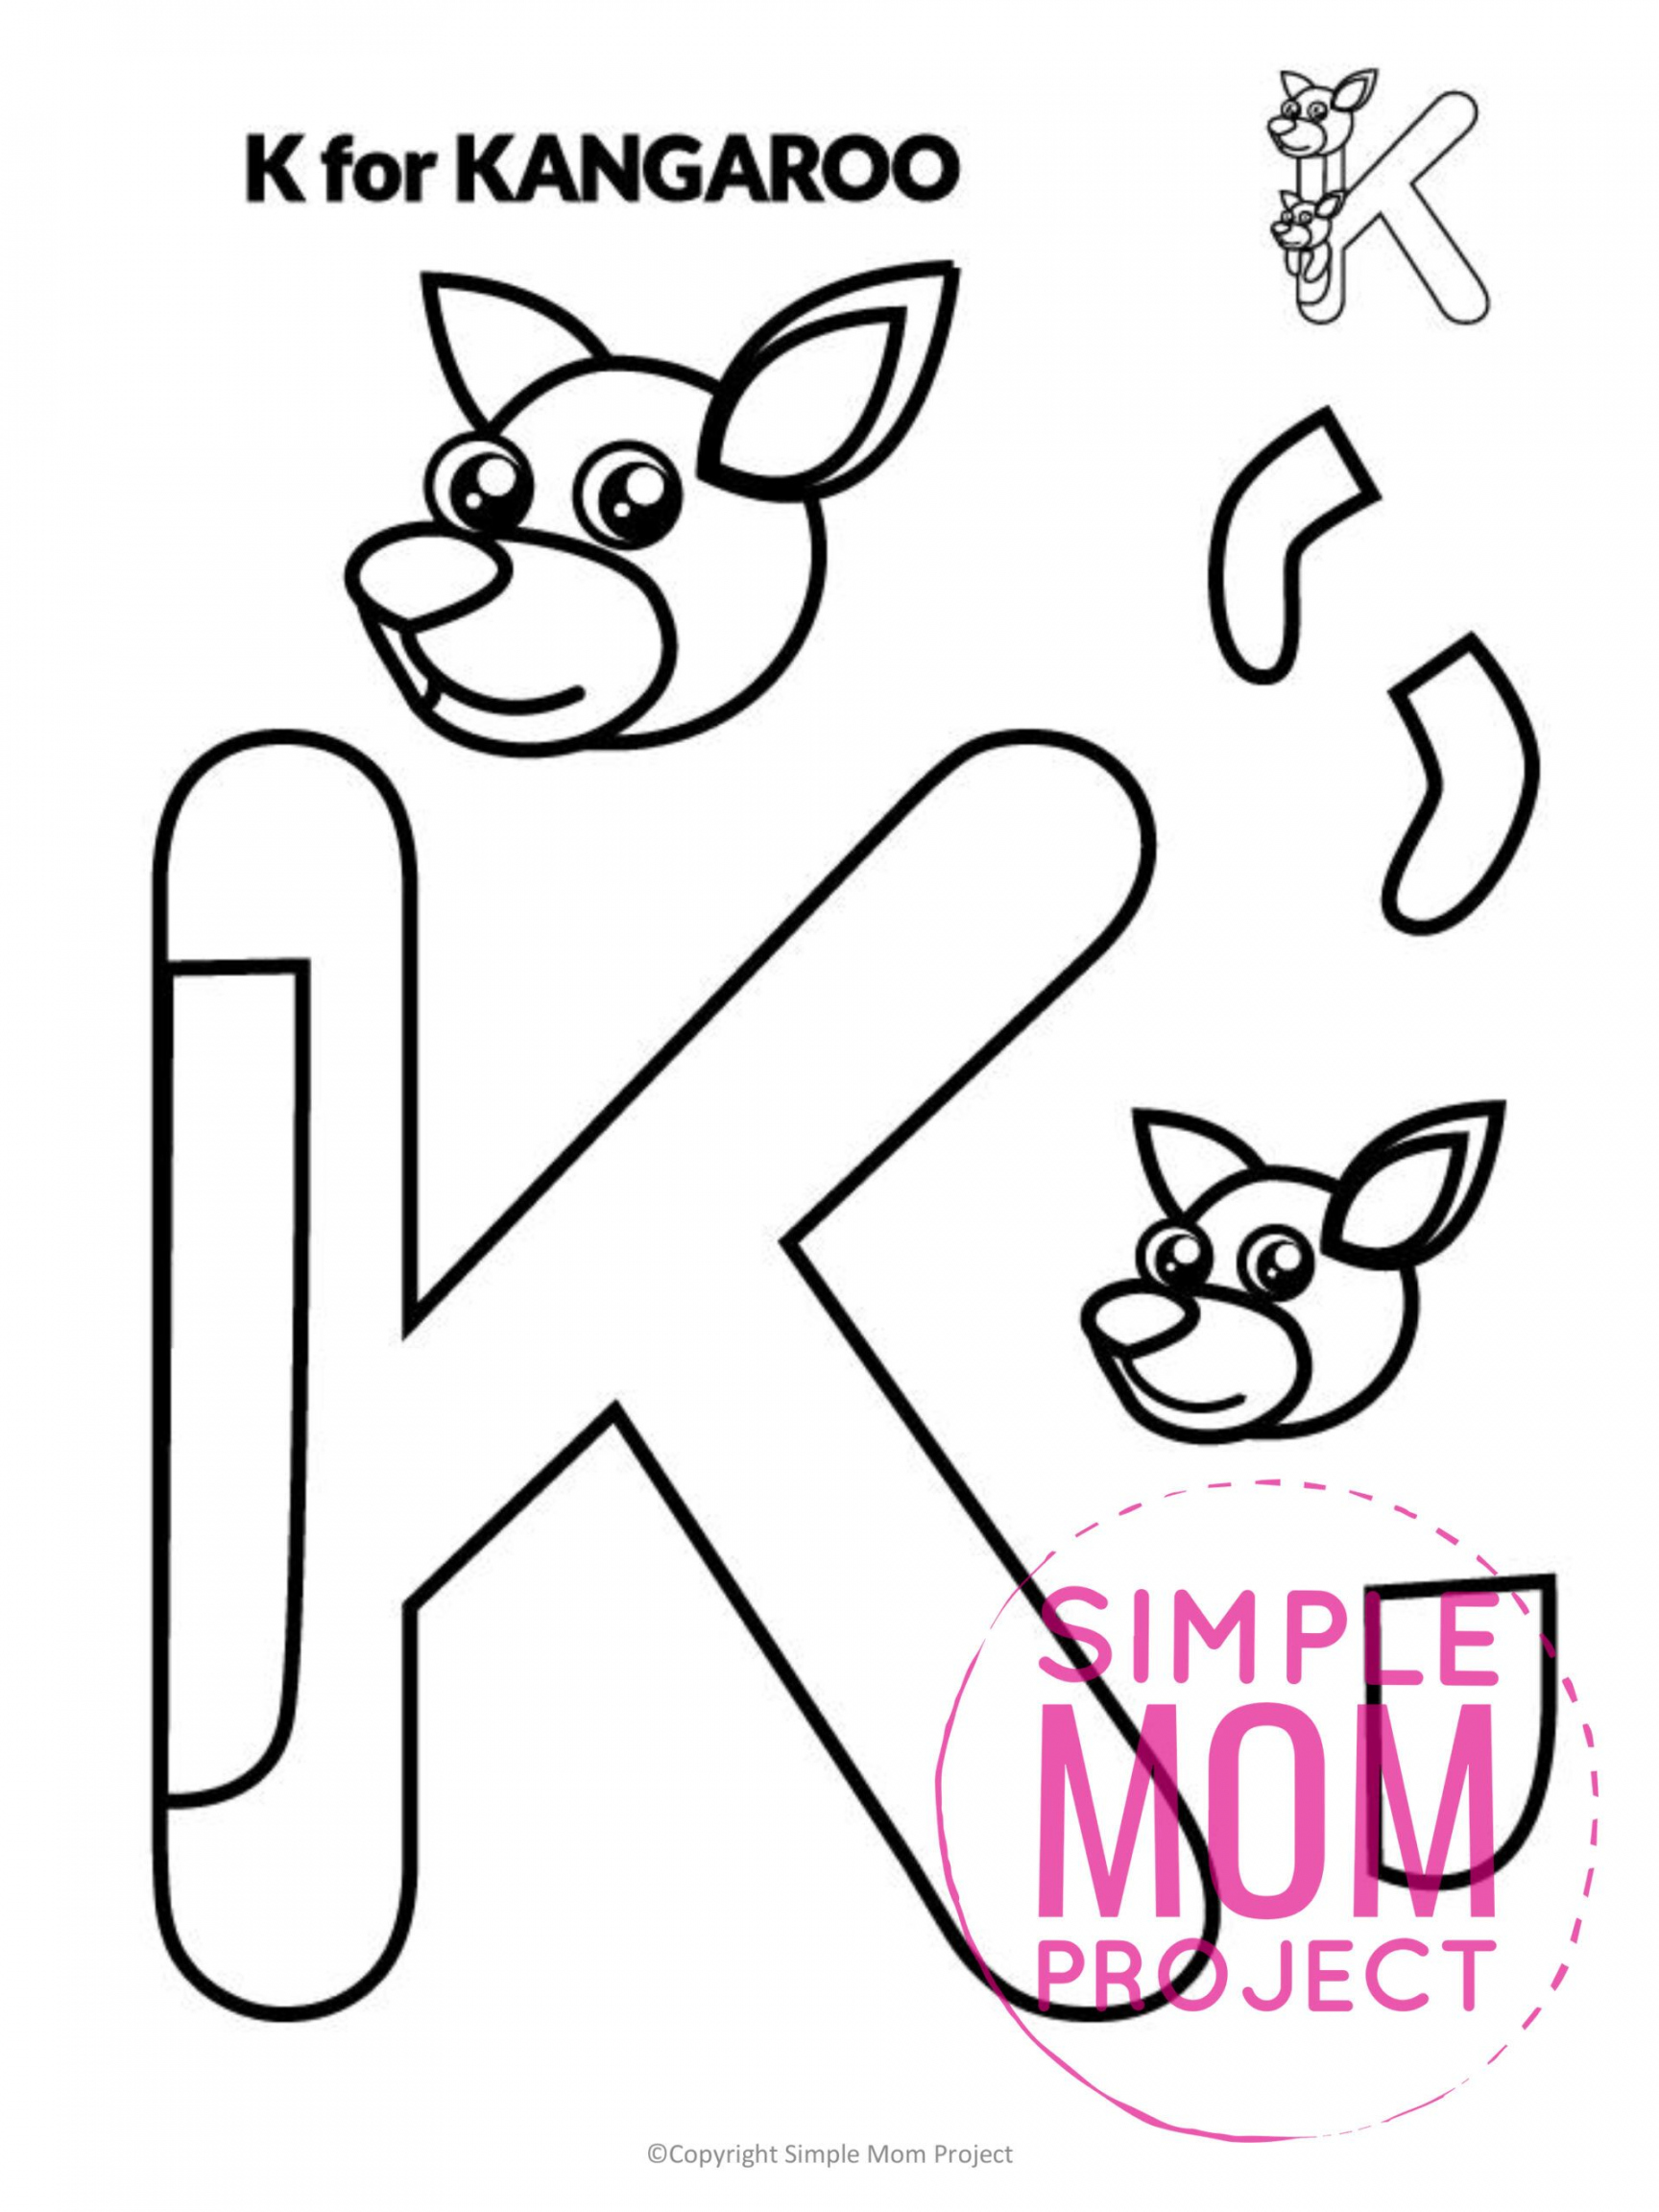 Free Printable Letter K Craft Template  Letter k crafts  - FREE Printables - Free Printable Letter K Crafts